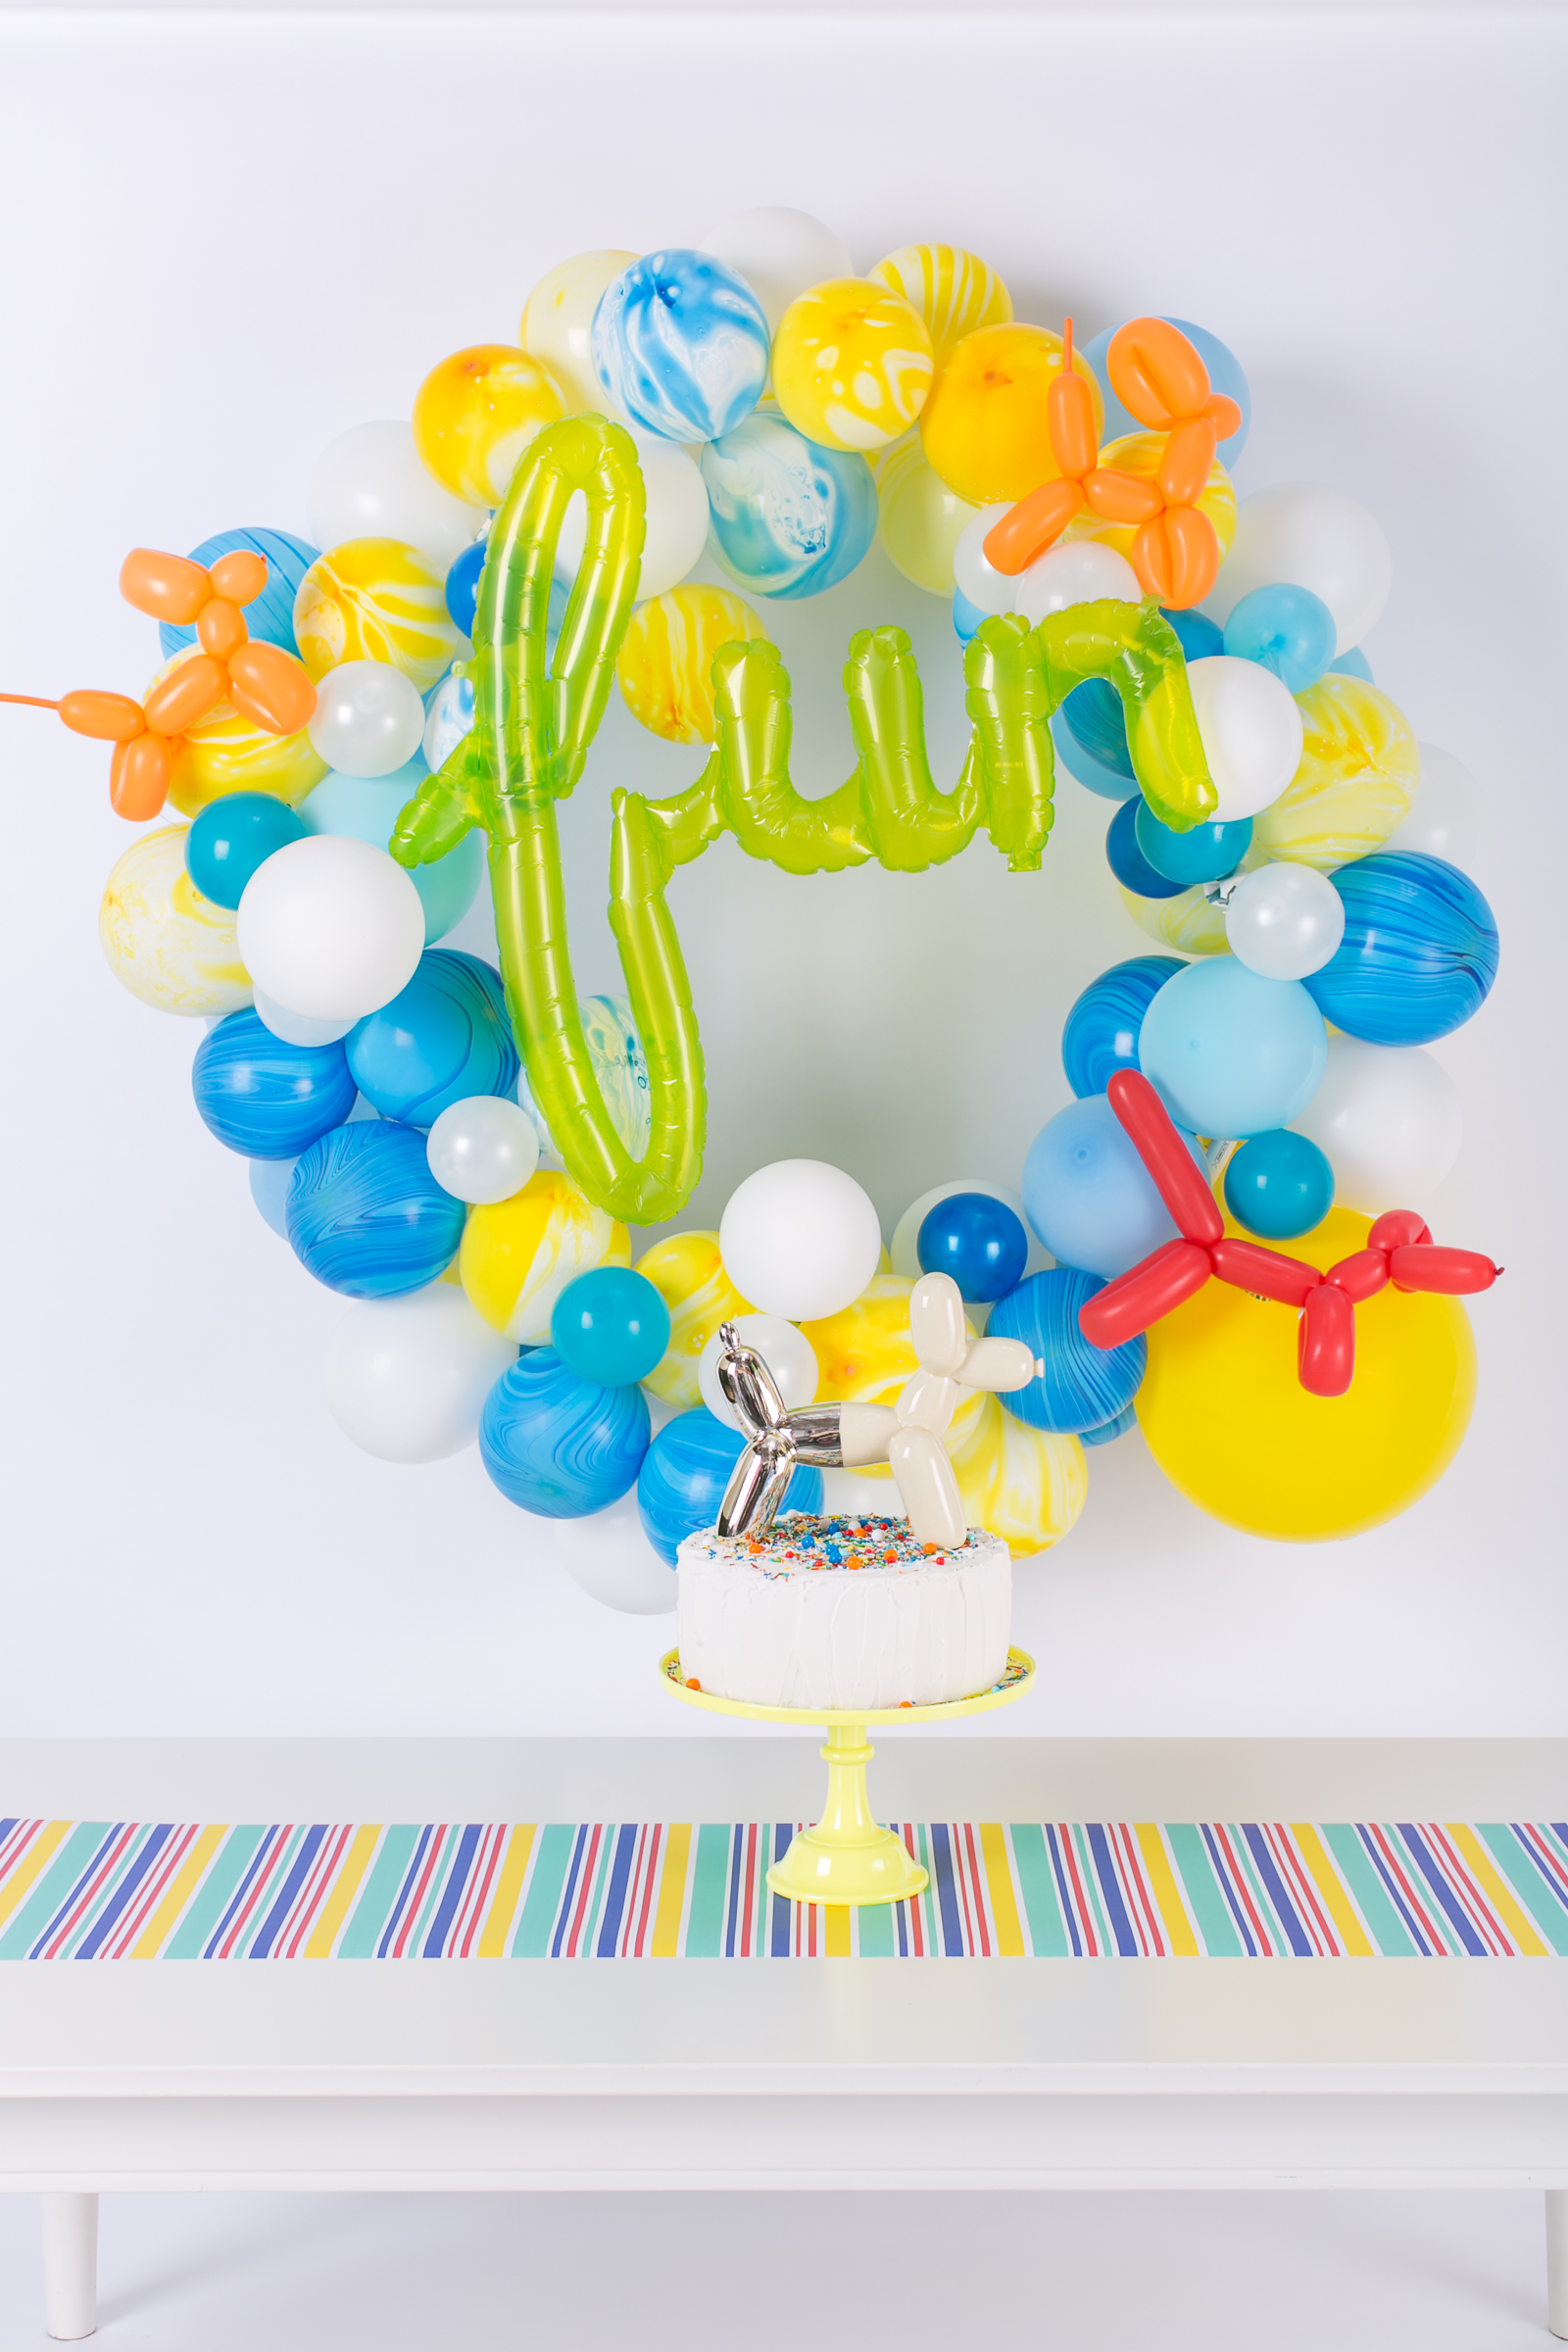 Balloon Animal Party Table and DIY Balloon Wreath